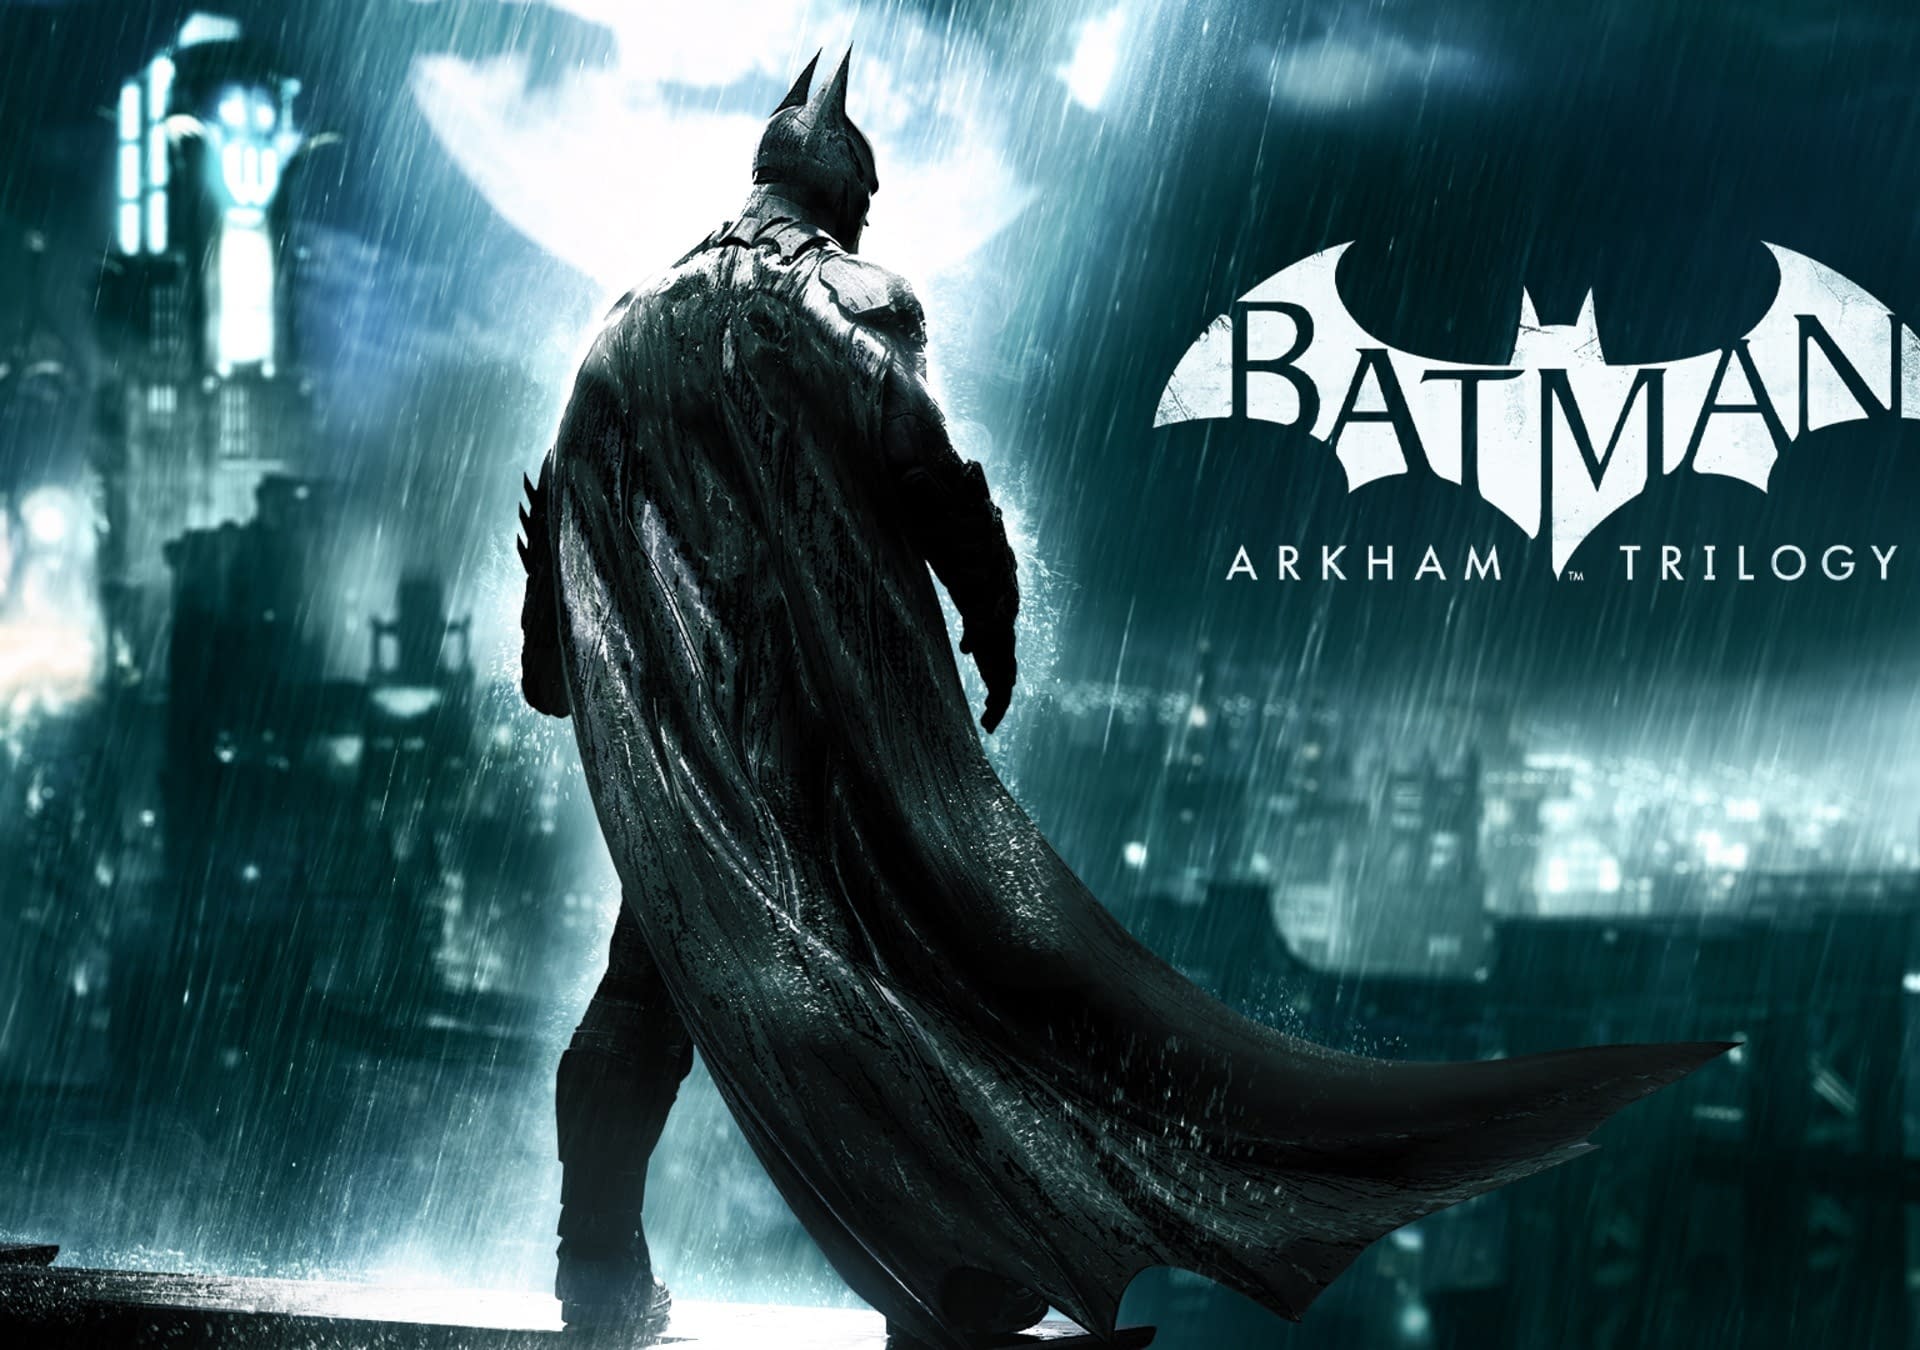 Switch Private Batman: Arkham Tri Ertelogyed: Here’s New Release Date